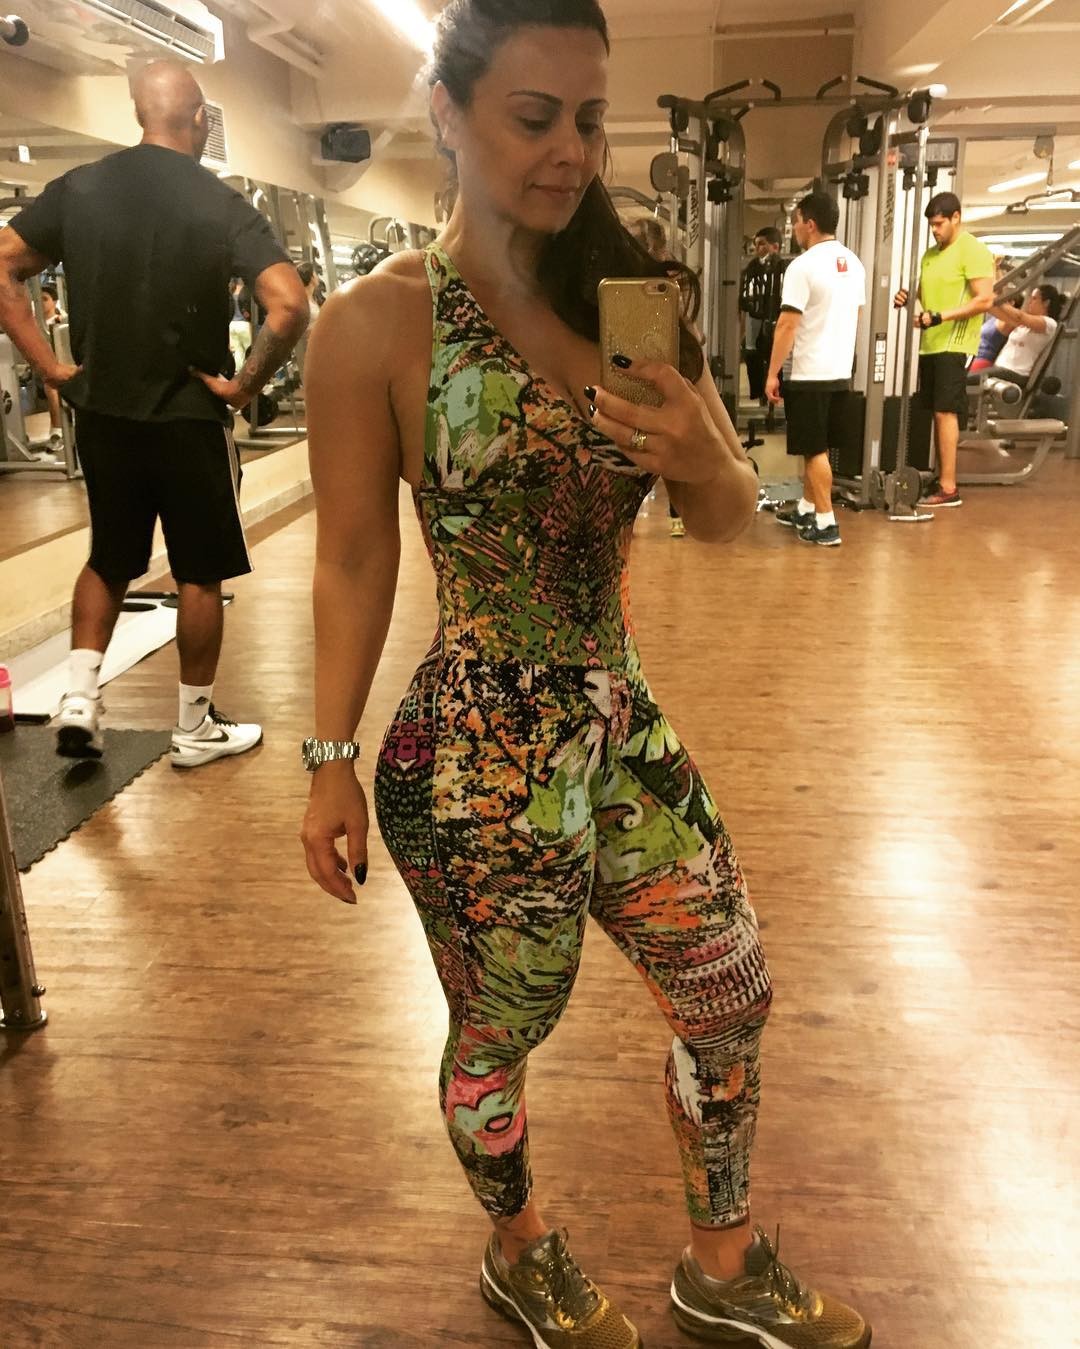 Viviane Araújo no Instagram (Foto: Reprodução/Instagram)